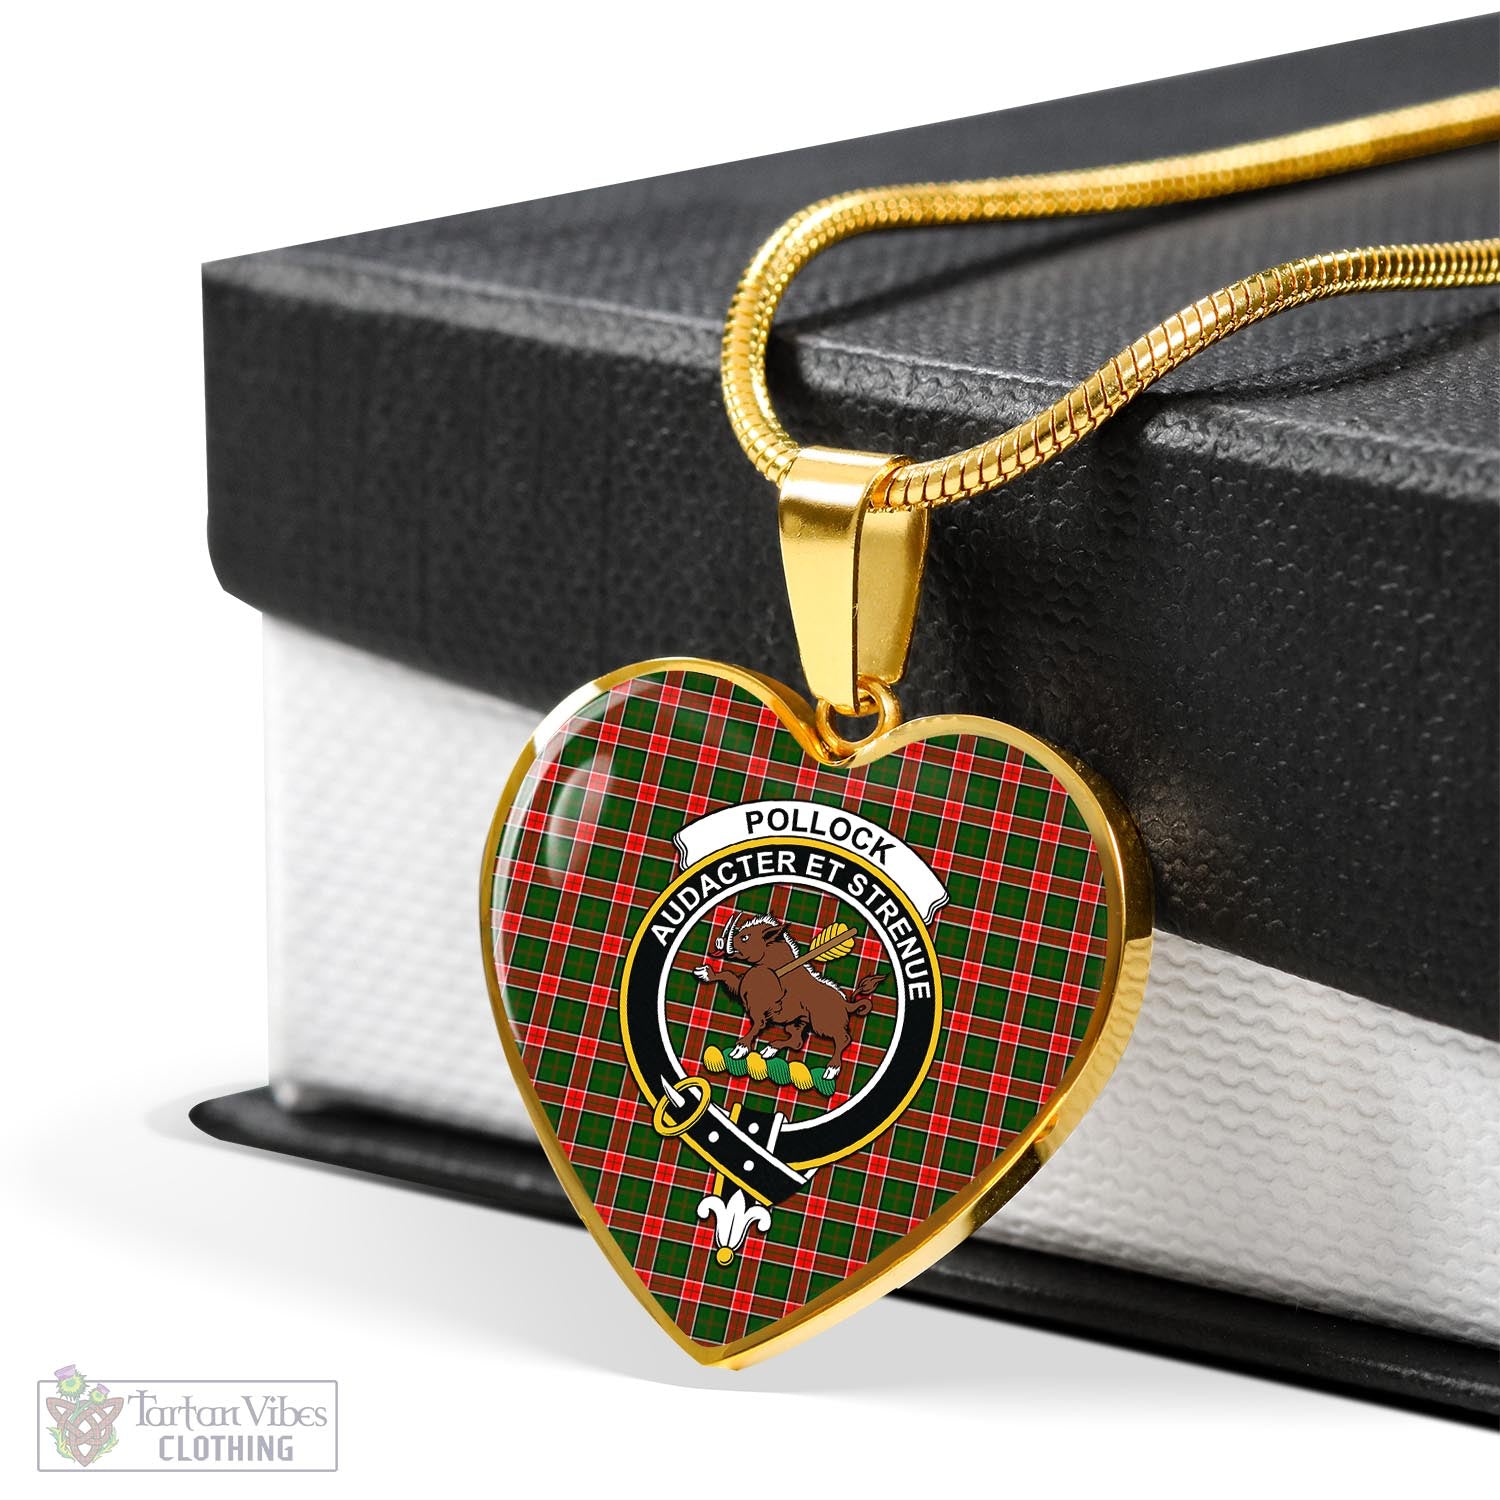 Tartan Vibes Clothing Pollock Modern Tartan Heart Necklace with Family Crest